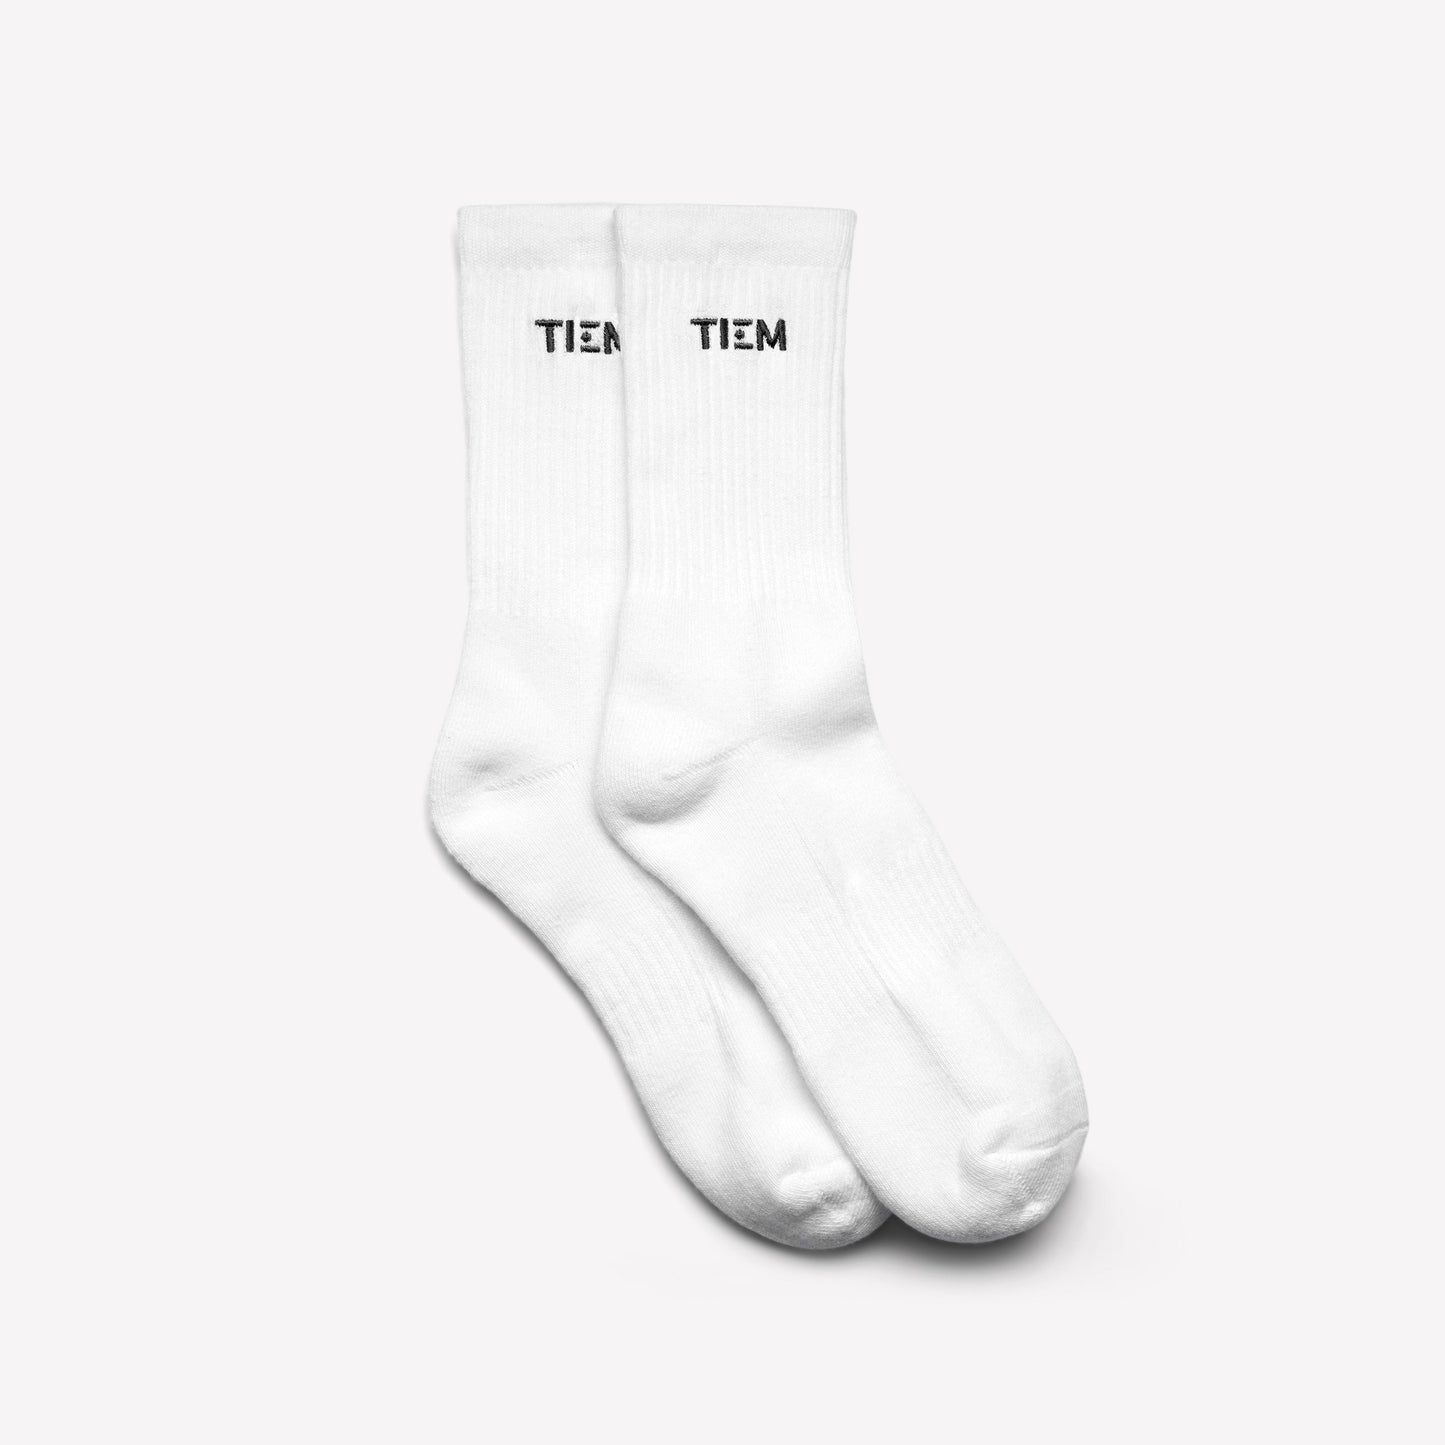 Cotton Crew Socks - White/Black